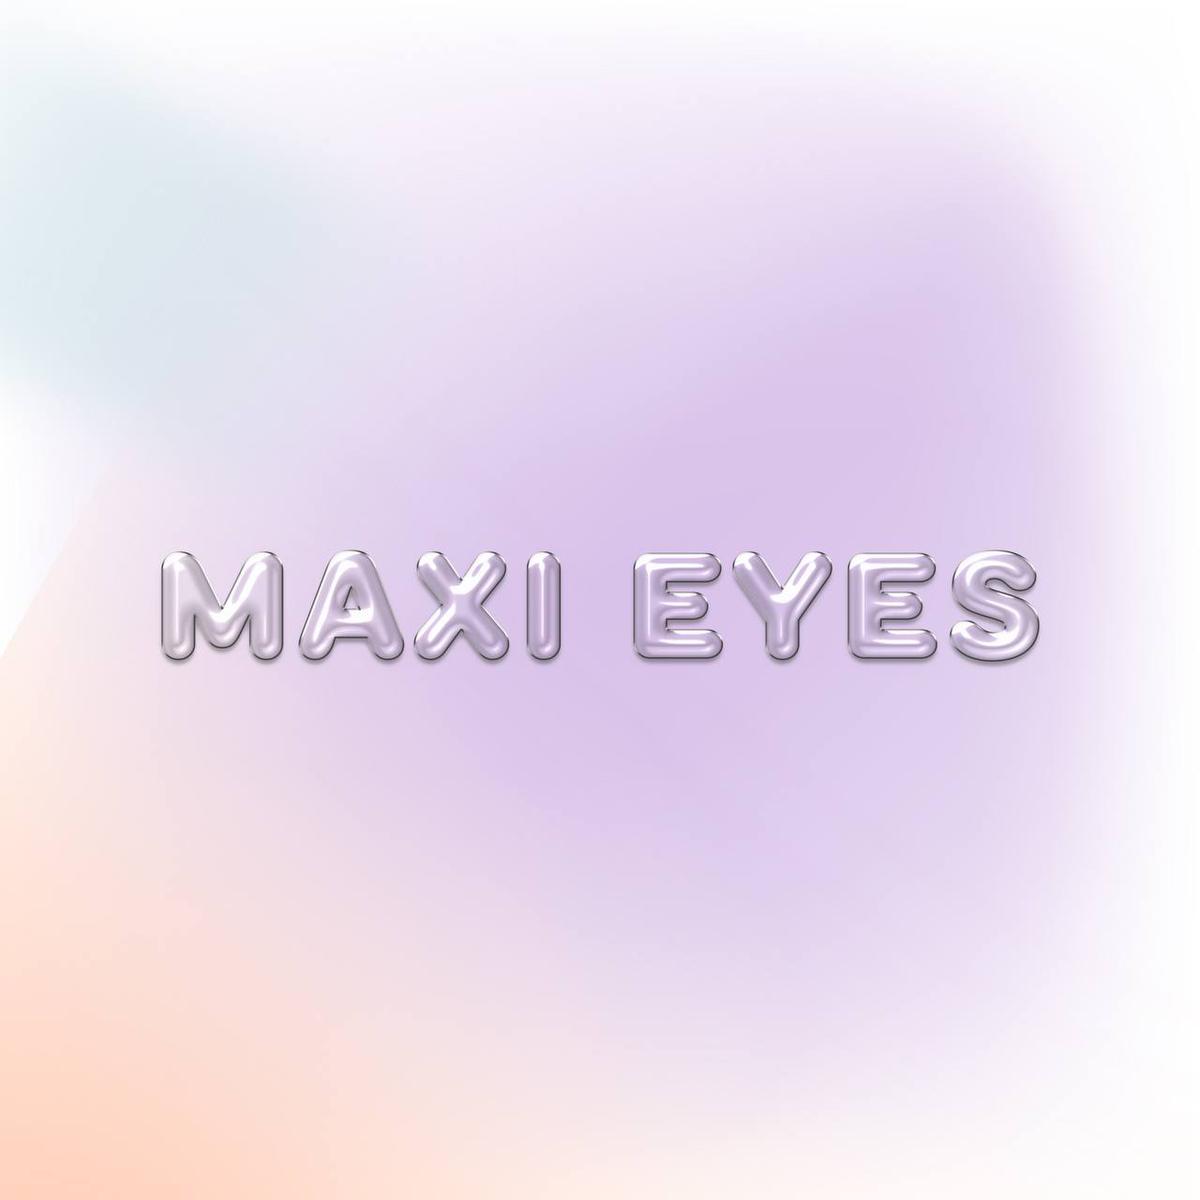 Maxi Eyes 's images